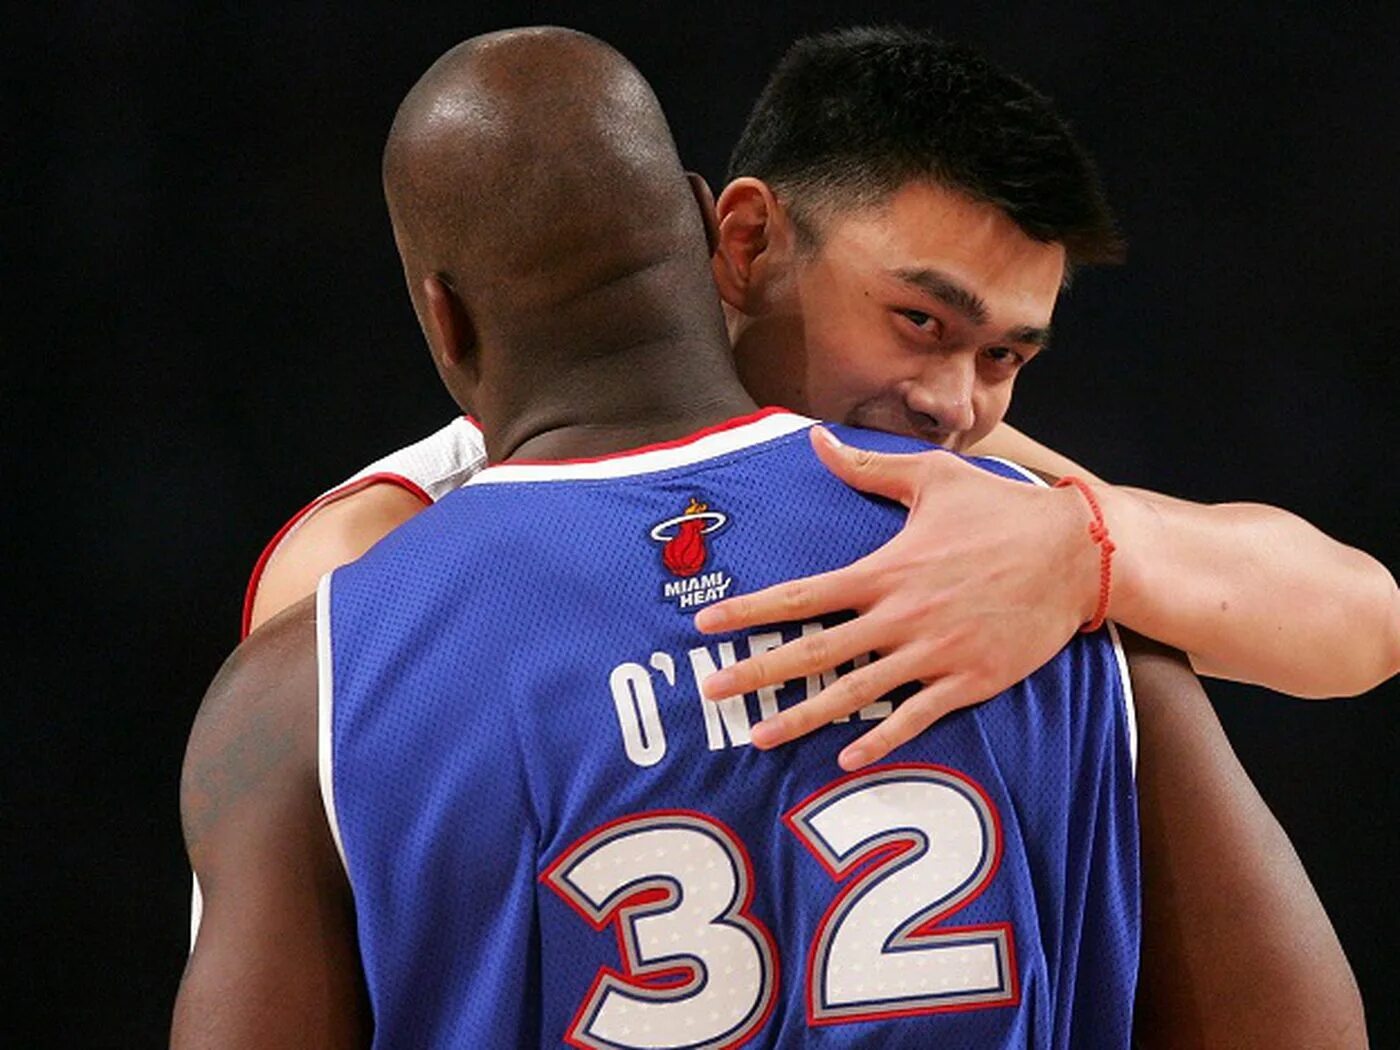 Yao ming. Яо мин. Яо мин баскетболист. Китайский баскетболист. Высокий китаец баскетболист.